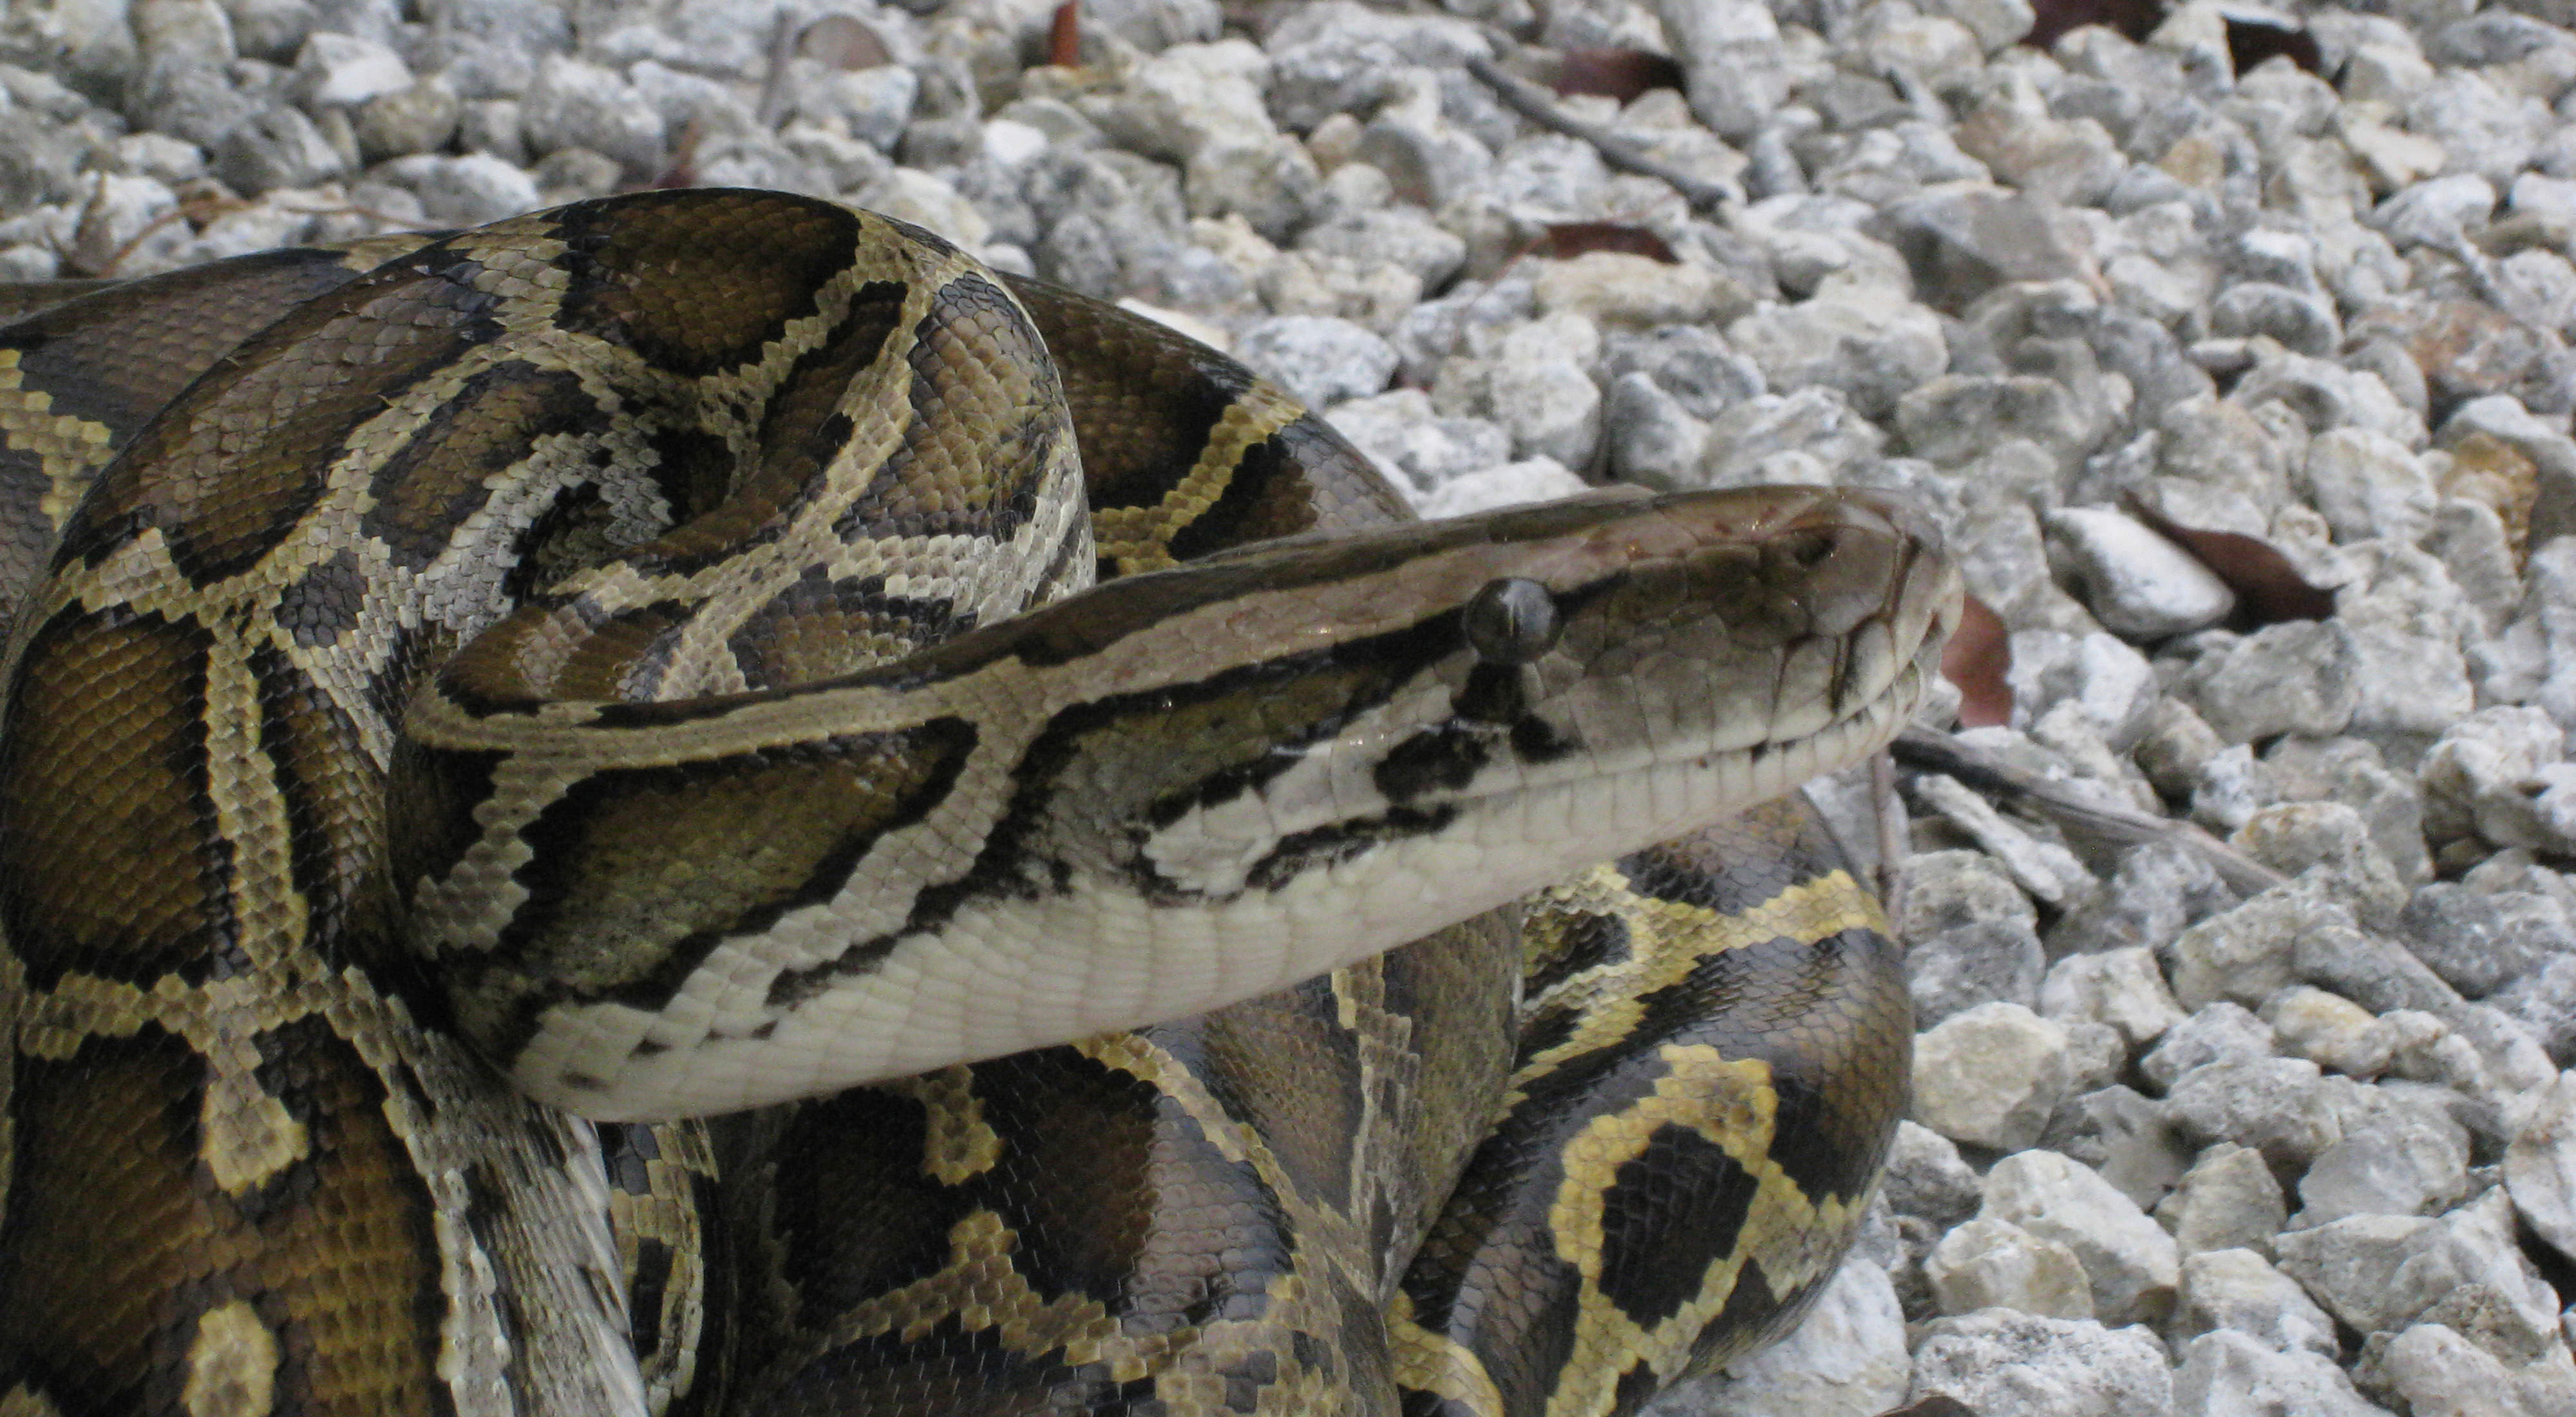 A large Burmese python coiled up.